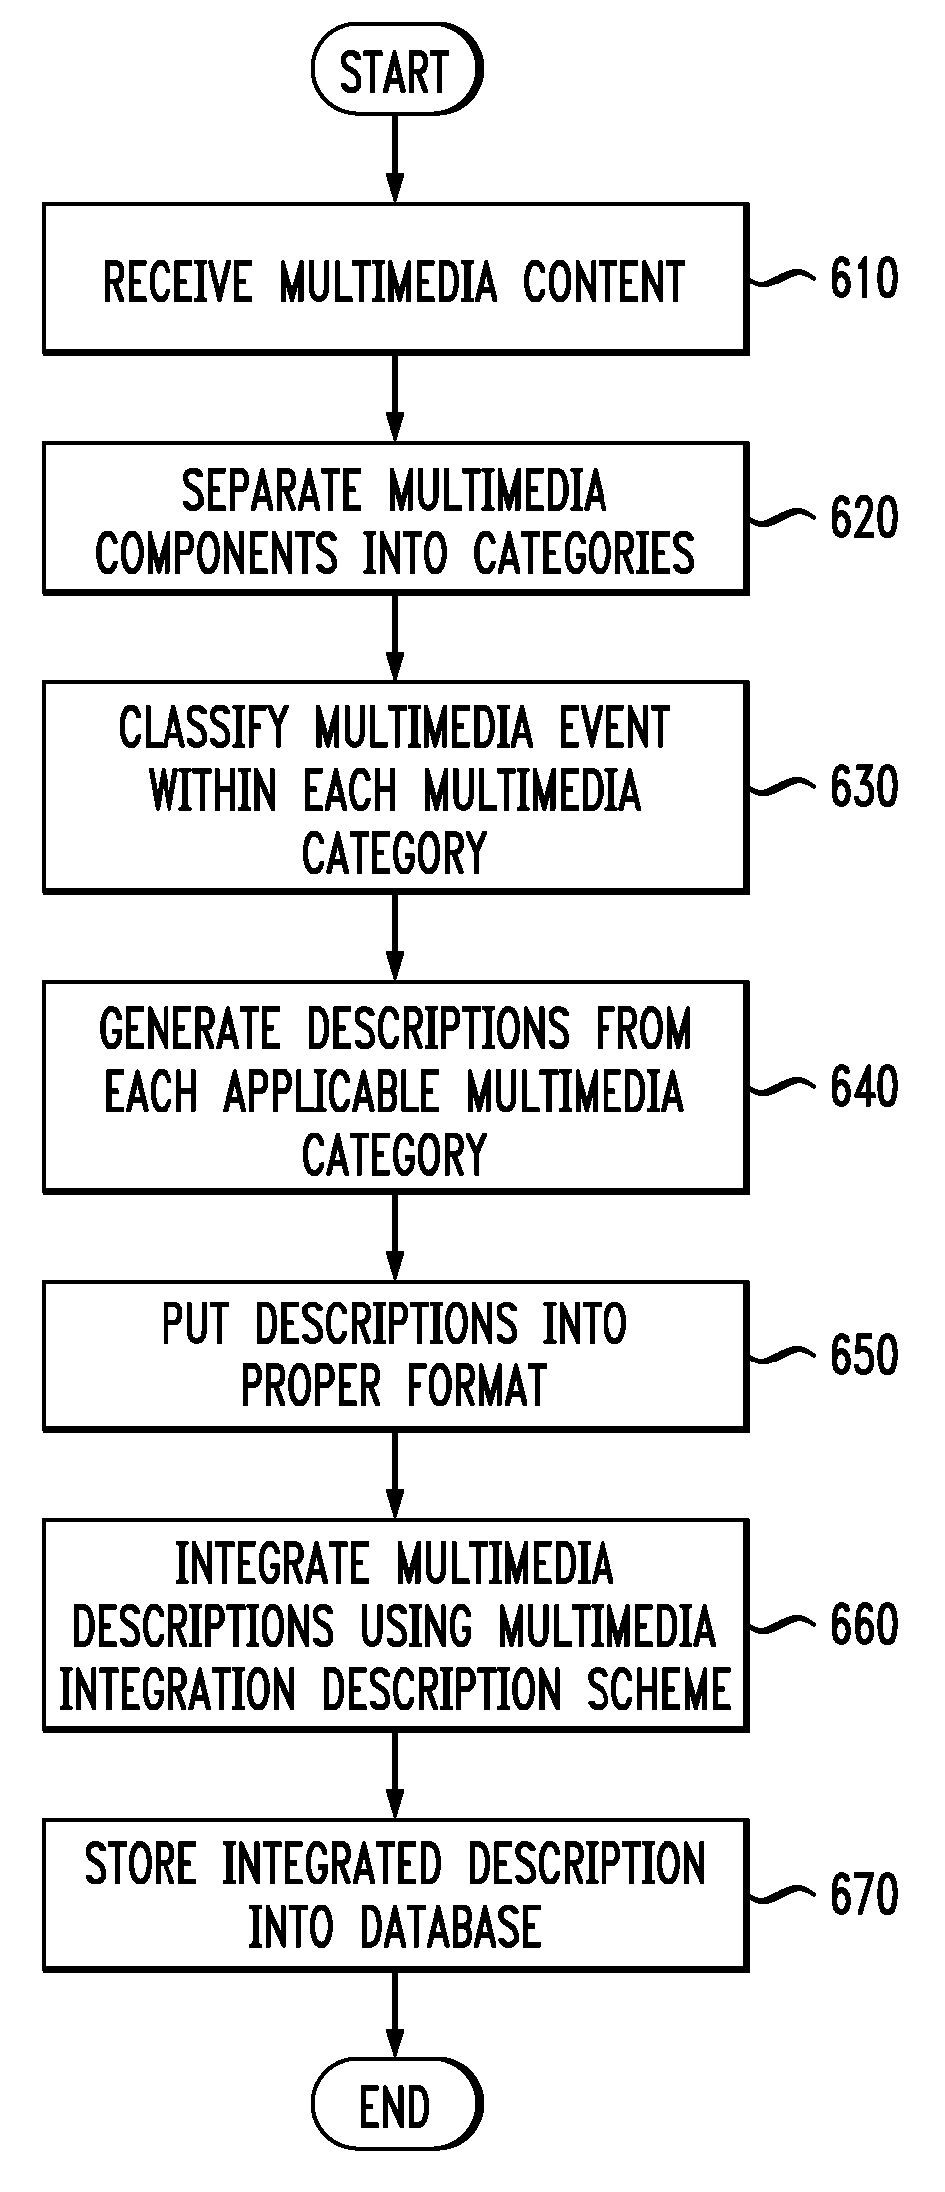 Multimedia Integration Description Scheme, Method and System For MPEG-7